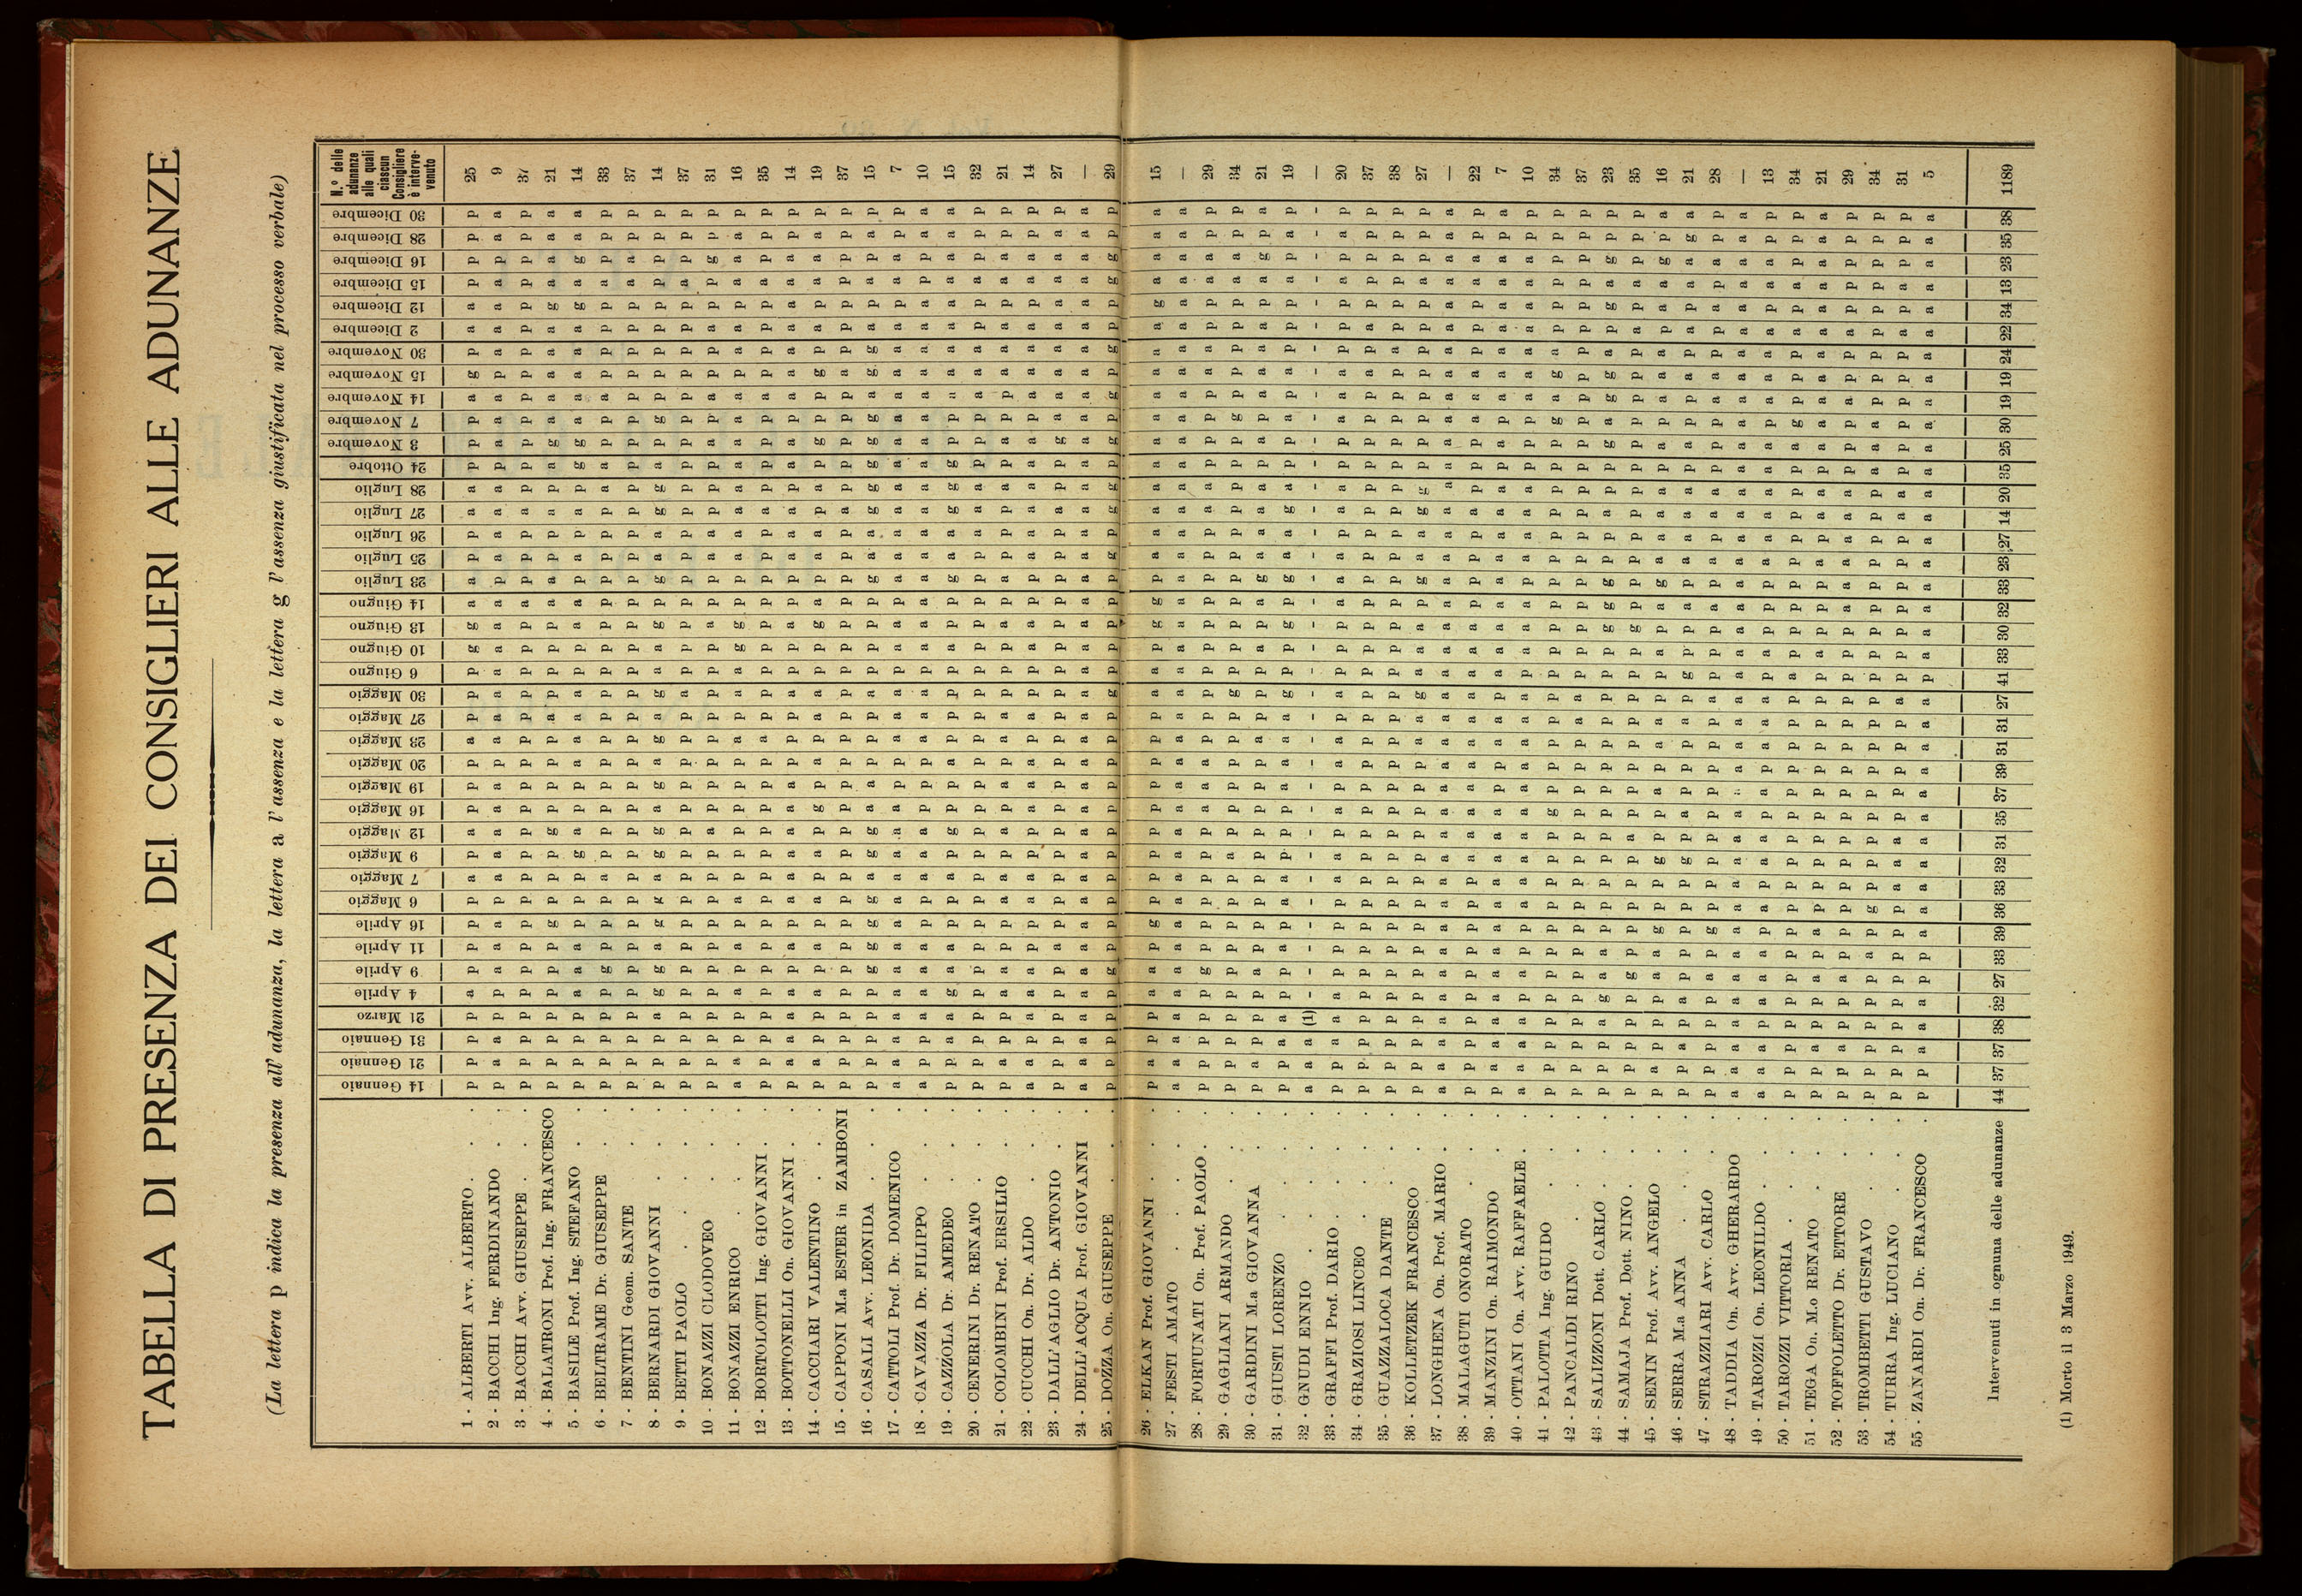 Indice volume 14.1.1949 - 30.12.1949